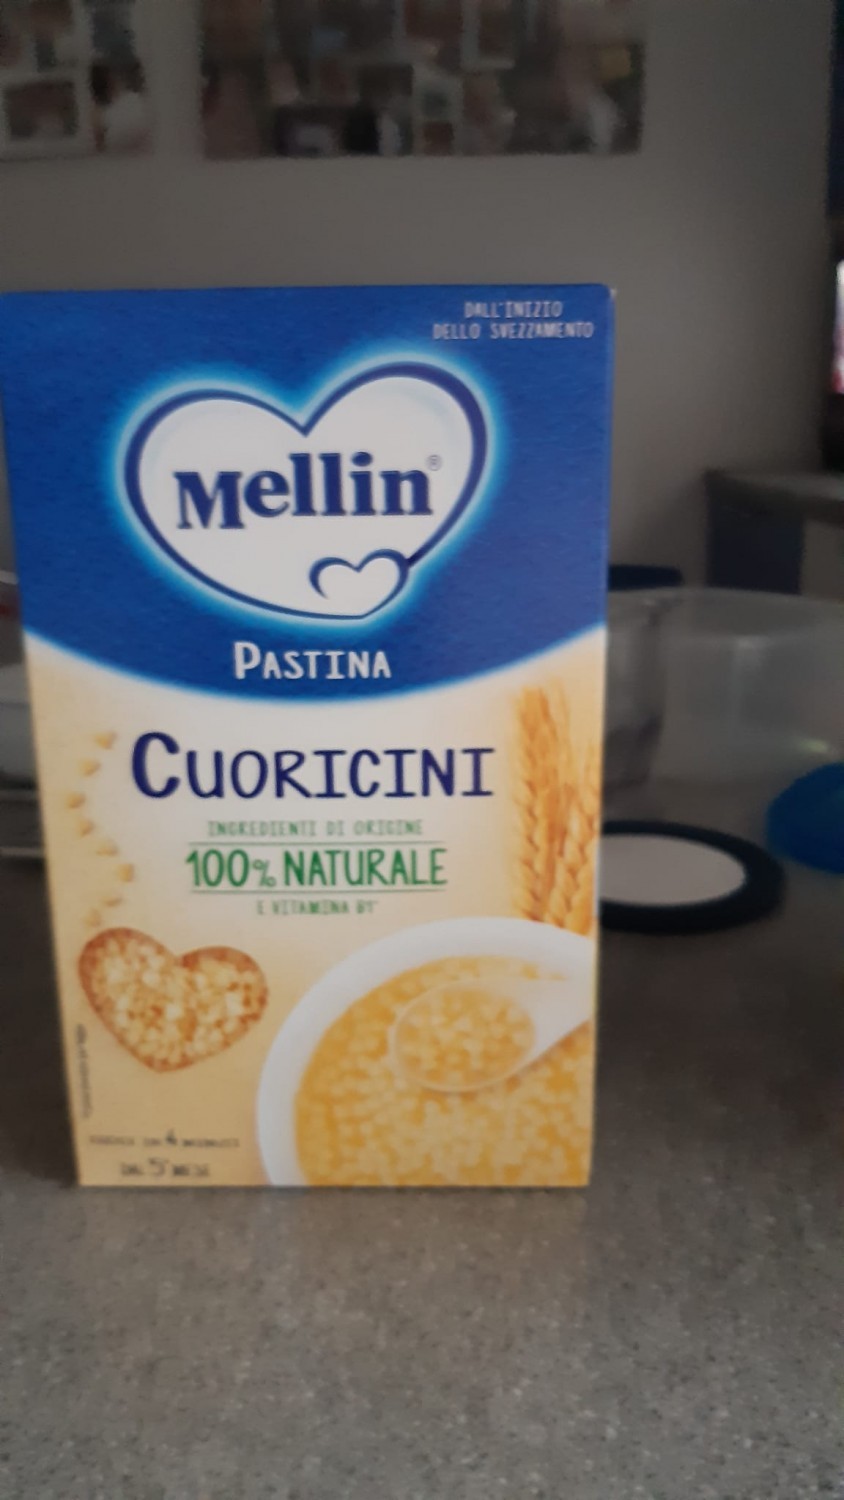 Mellin Pastina-Cuoricini Reviews